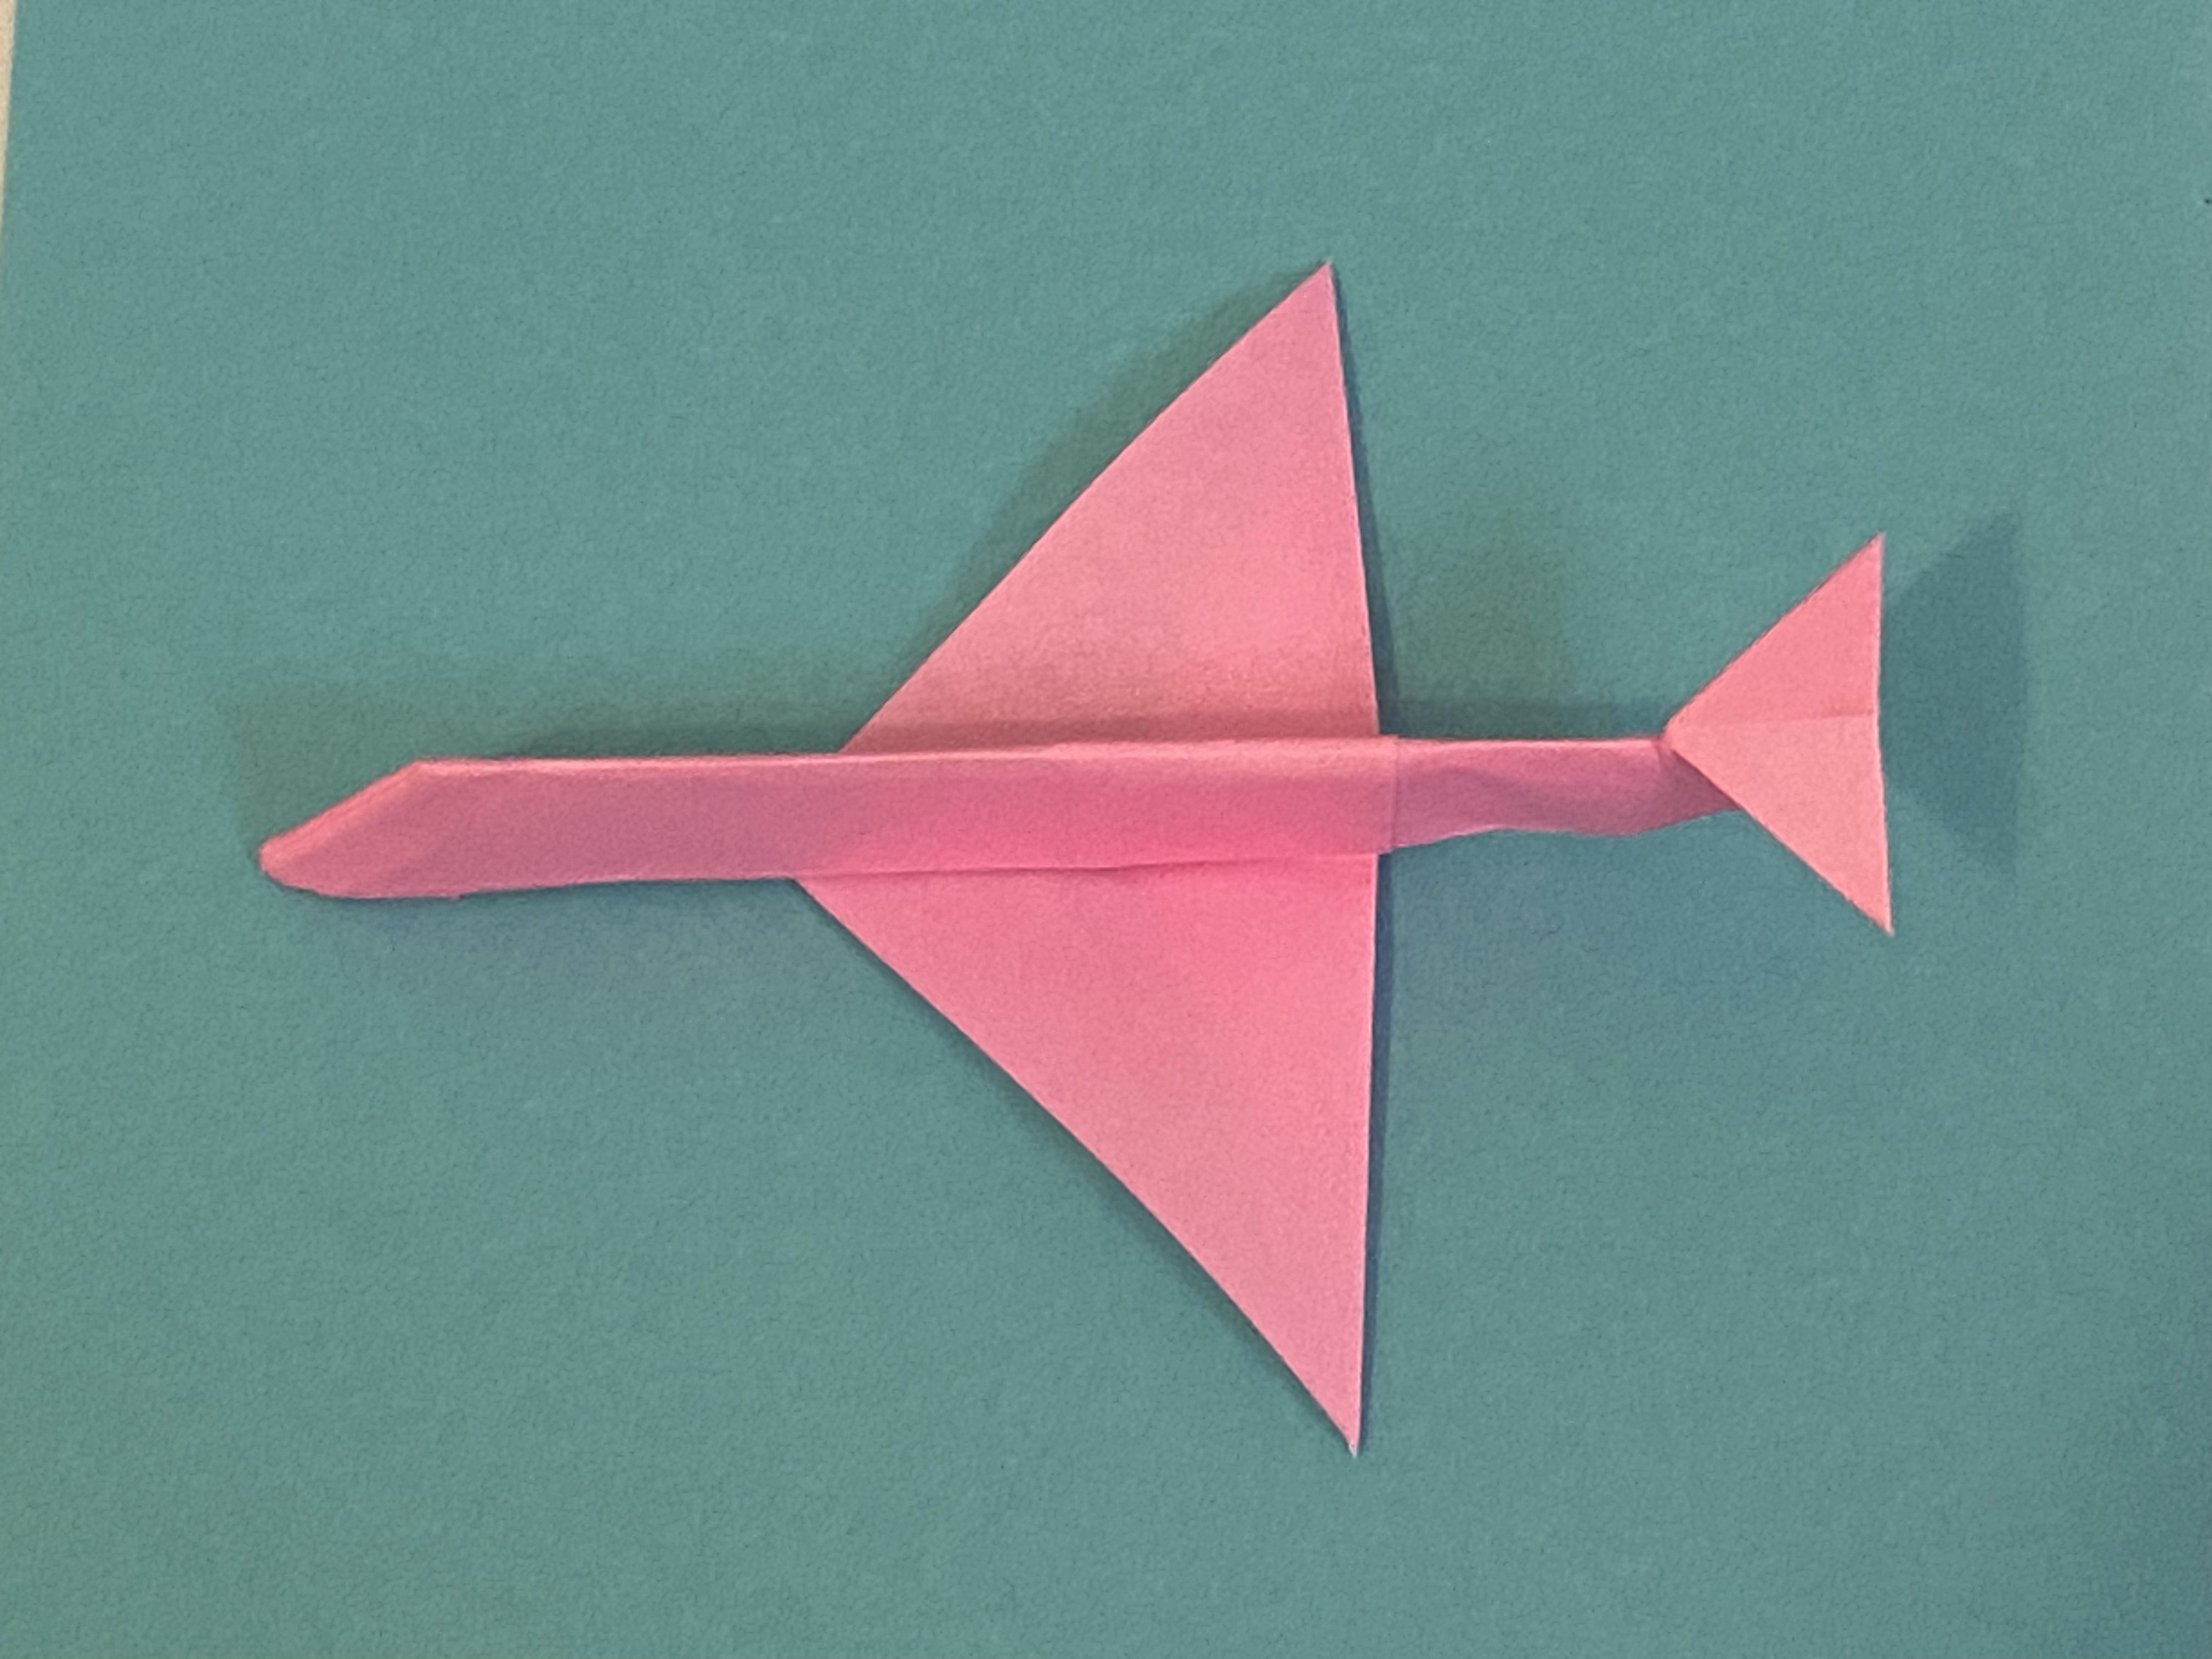 An origami airplane, designed by Ronik Bhaskar.